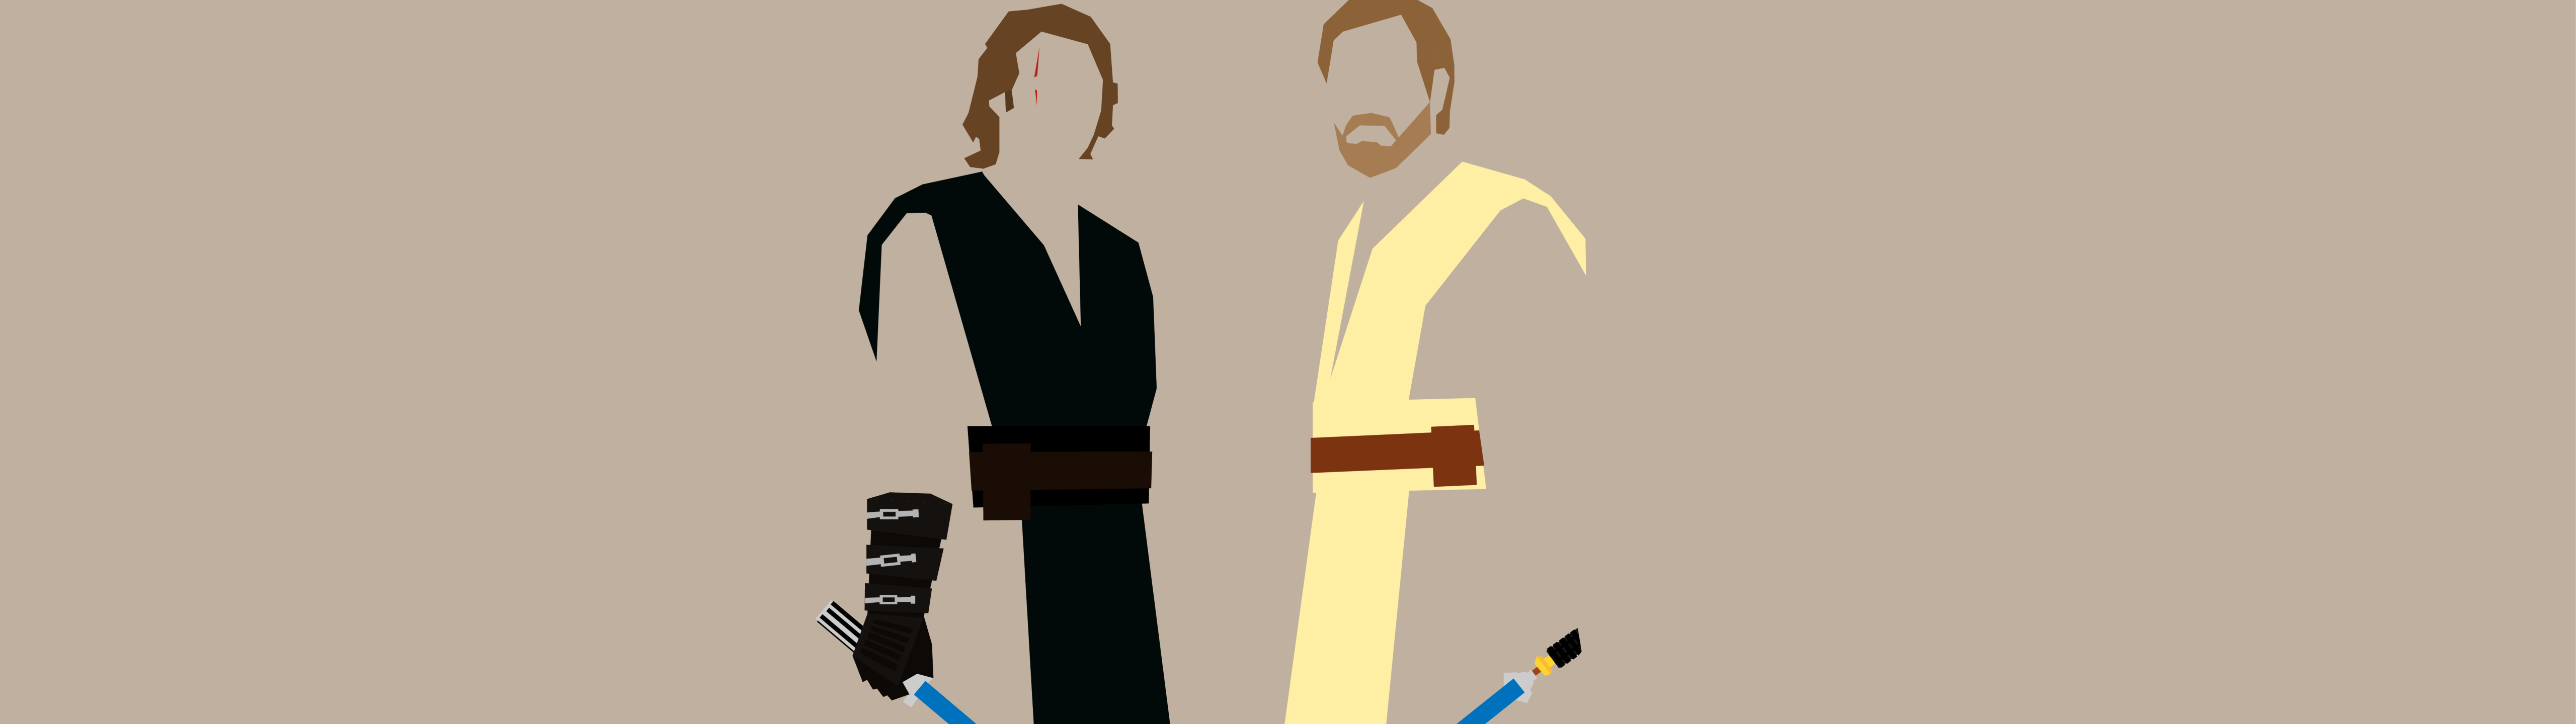 5120x1440 Obi-Wan Kenobi and Anakin Skywalker 5120x1440 Resolution Wallpaper,  HD Minimalist 4K Wallpapers, Images, Photos and Background - Wallpapers Den